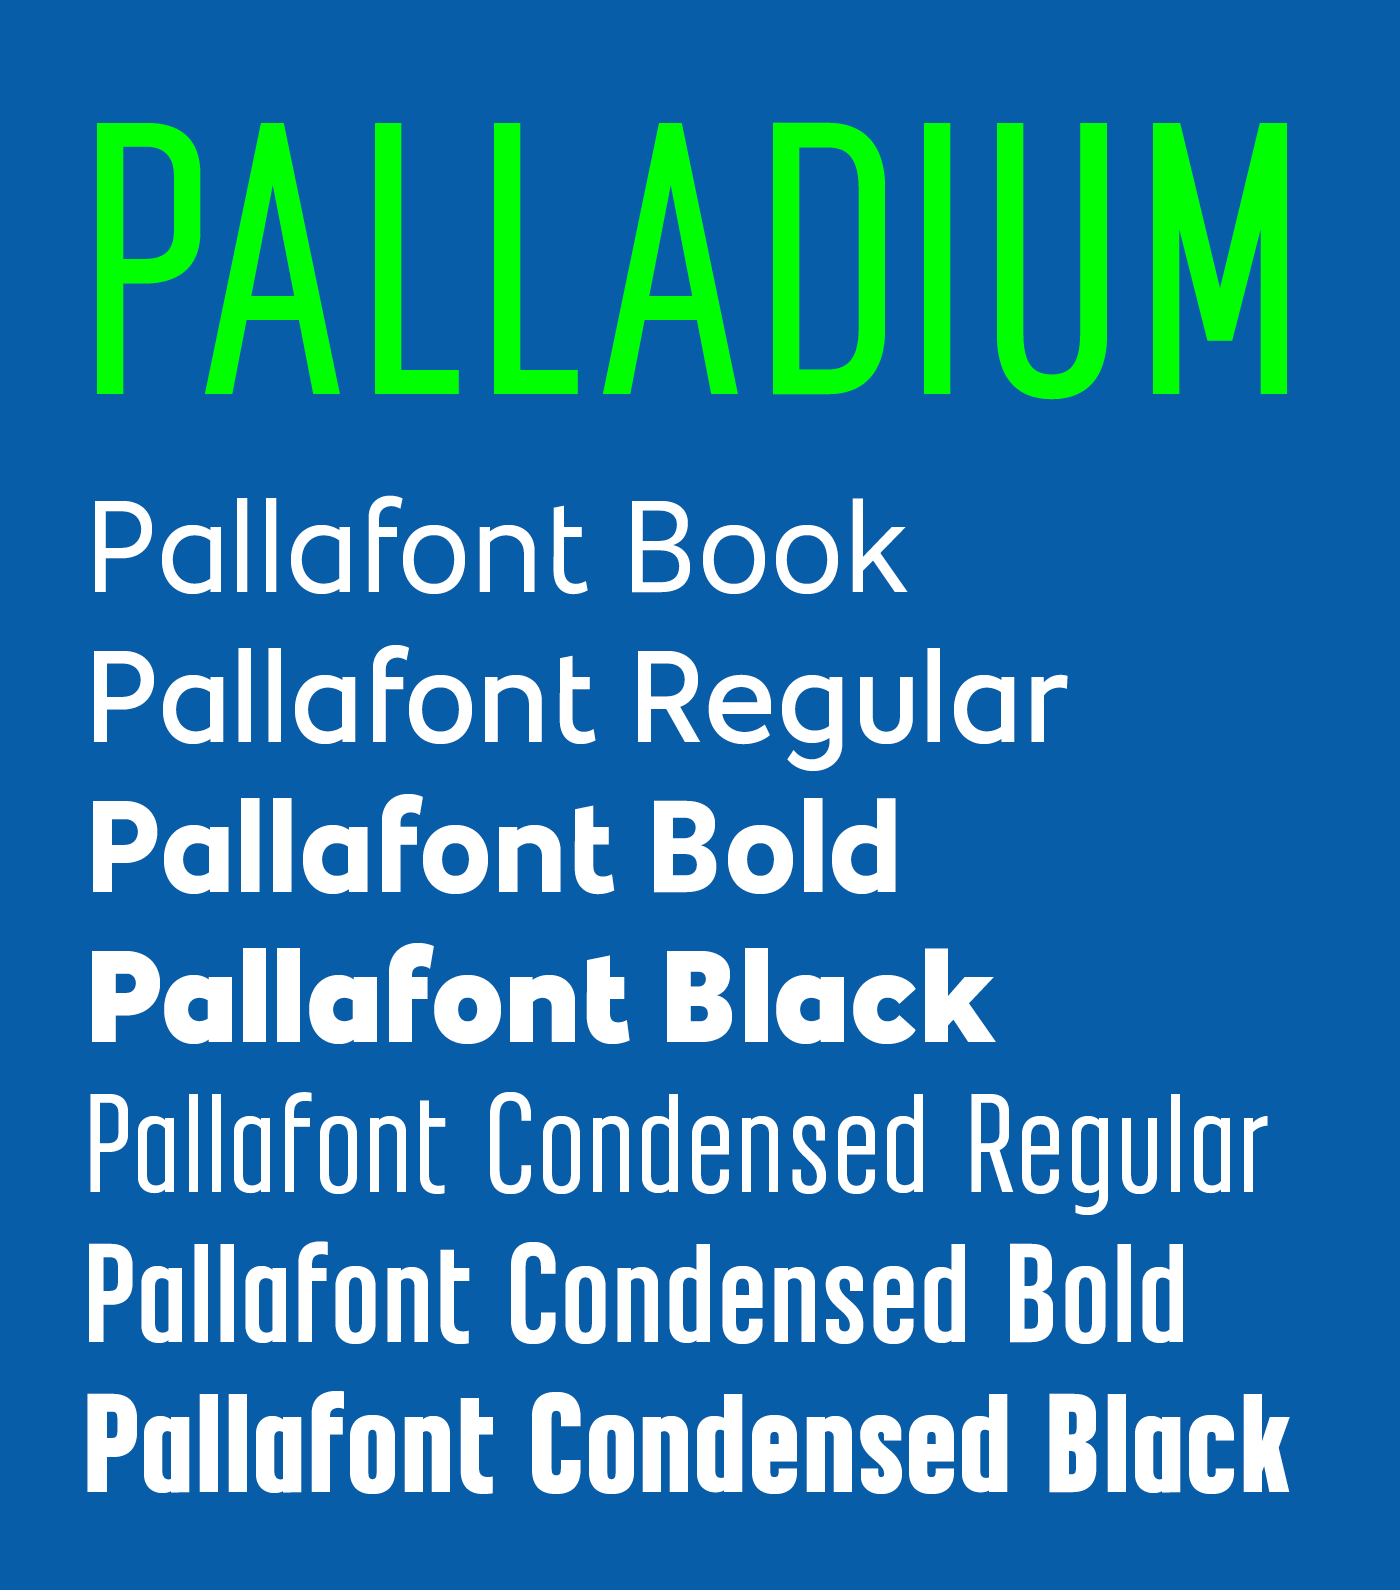 Police Palladium